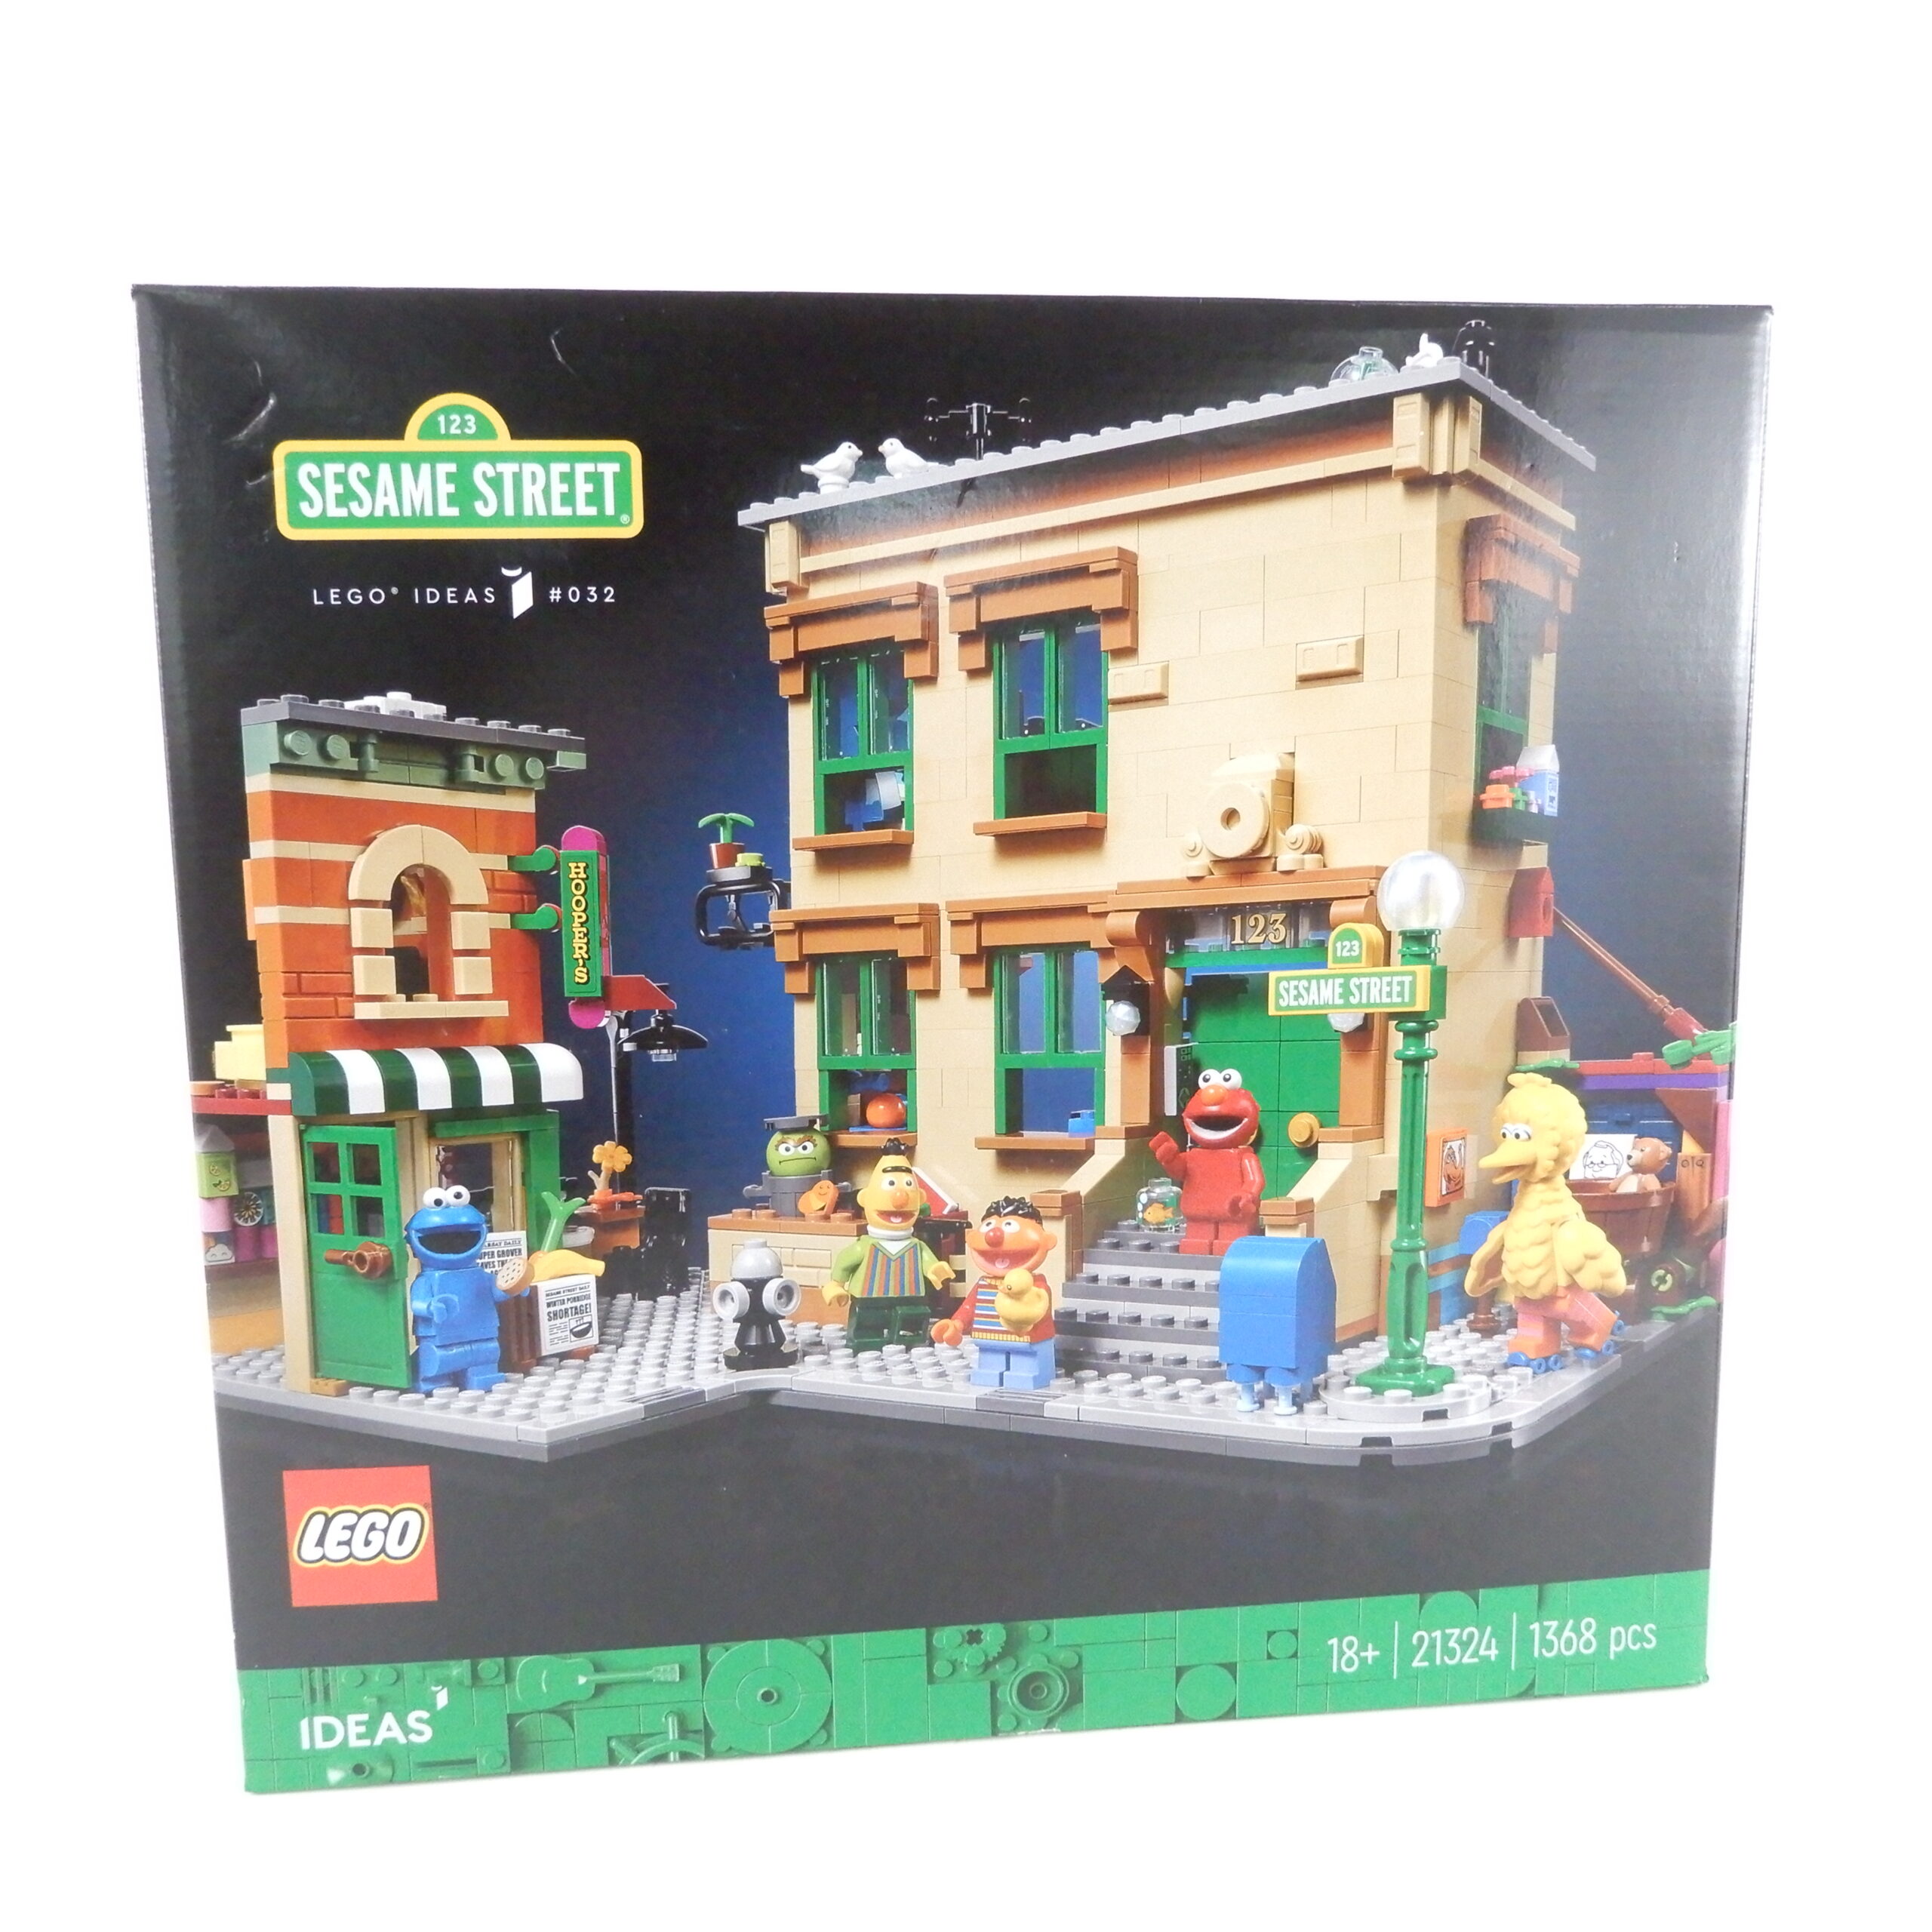 LEGO レゴブロック セサミストリート 21324 アイデアシリーズ オトナレゴの買取相場